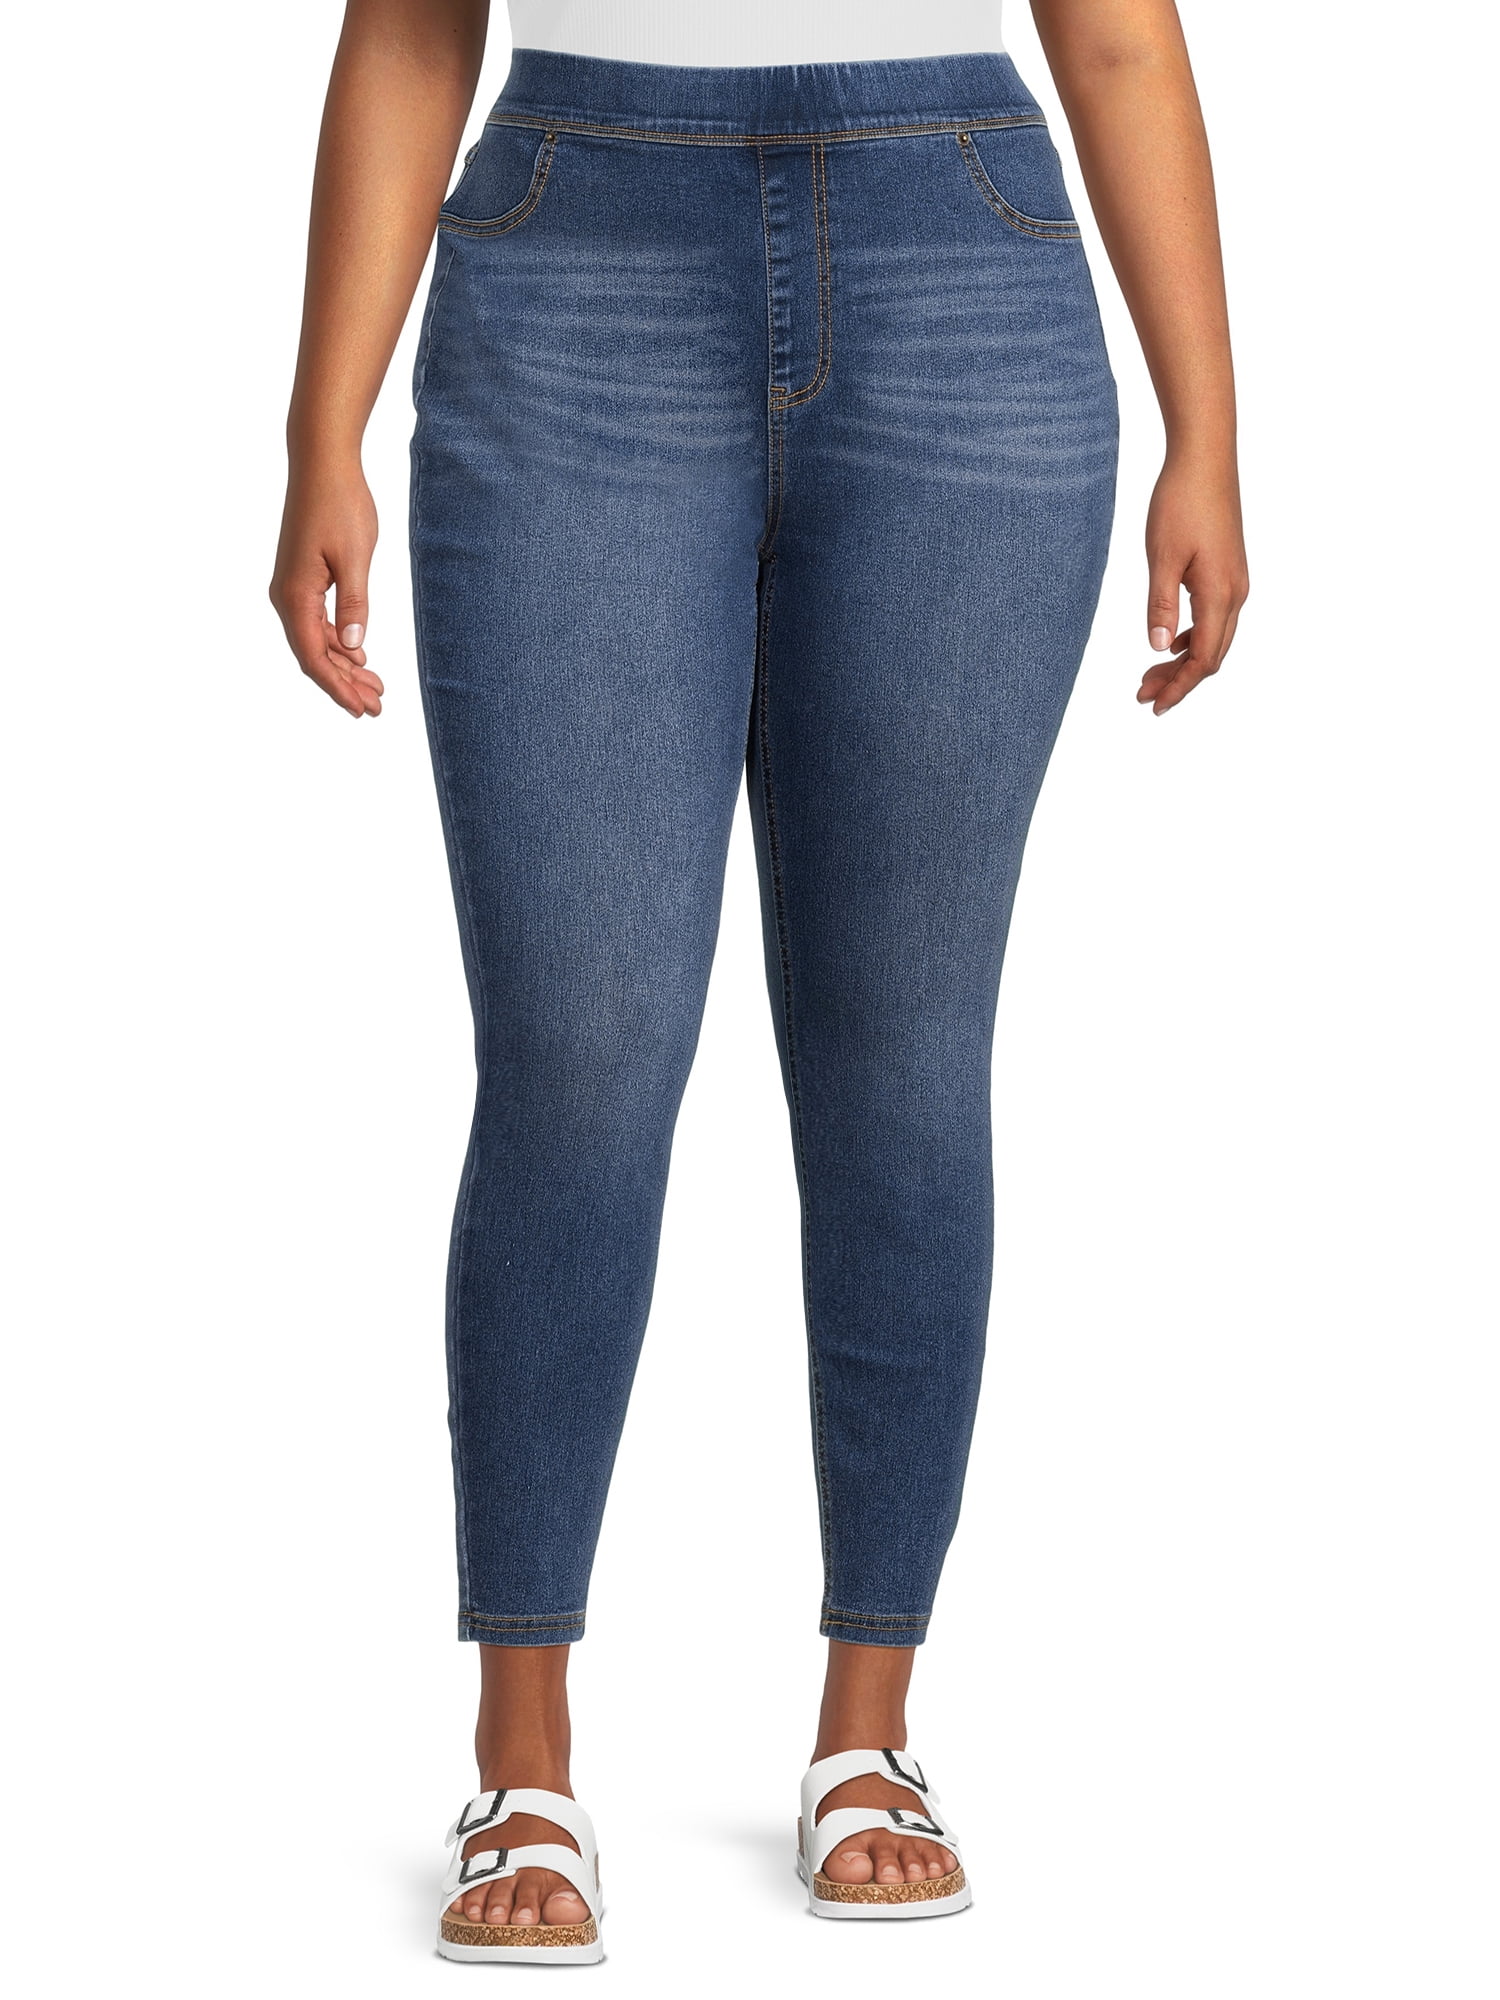 Lull værtinde dedikation Terra & Sky Women's Plus Size Jegging Jeans, 28" Inseam - Walmart.com